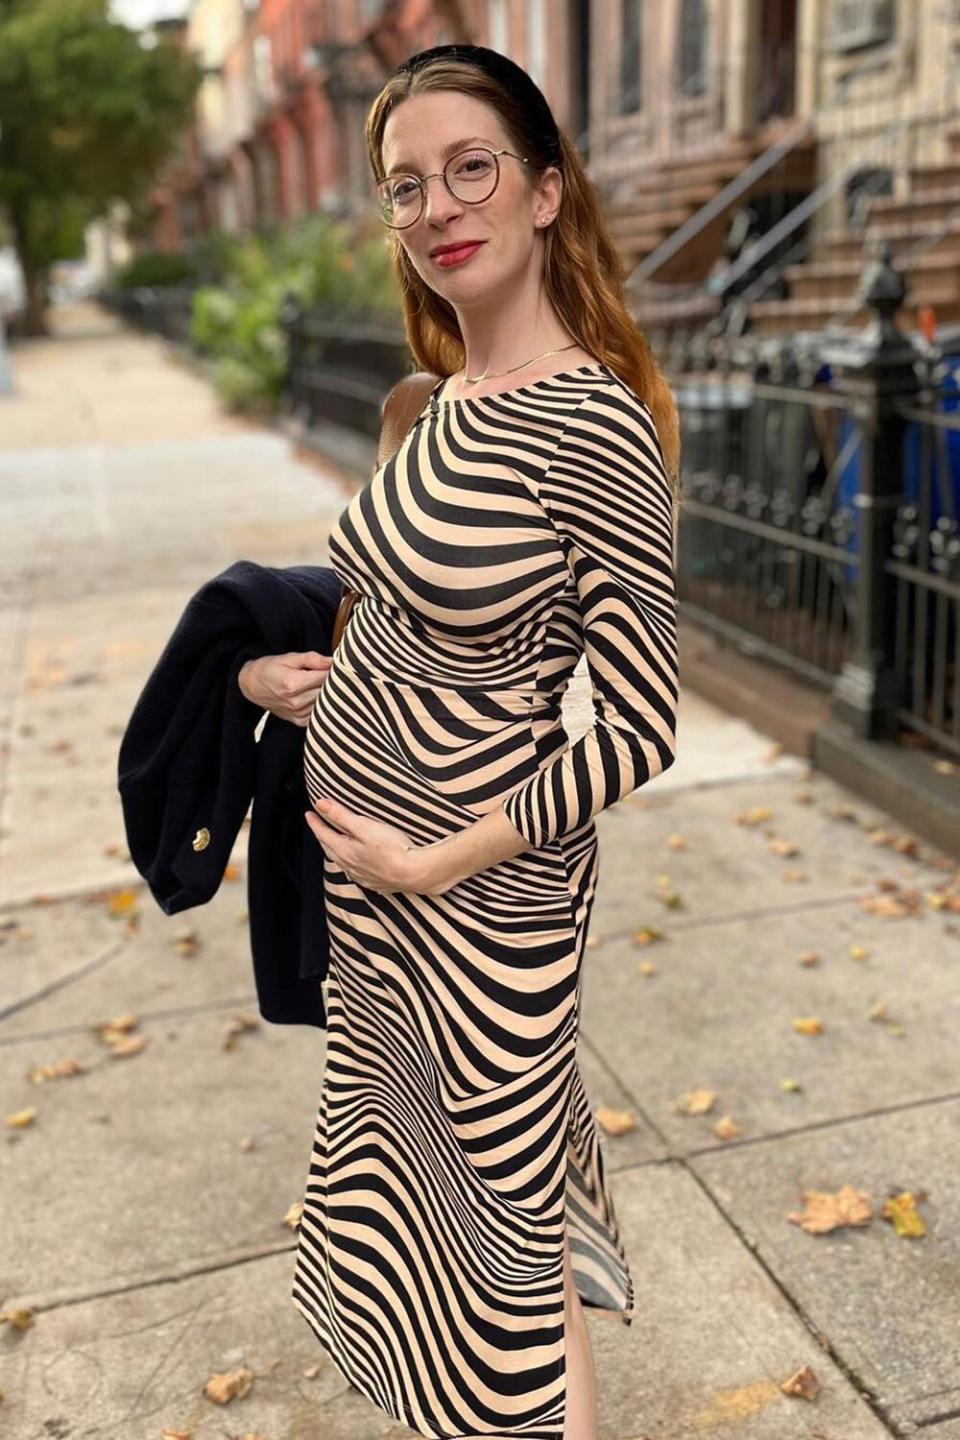 Molly Bernard Pregnant https://www.instagram.com/p/Ckg_0ORJPIu/